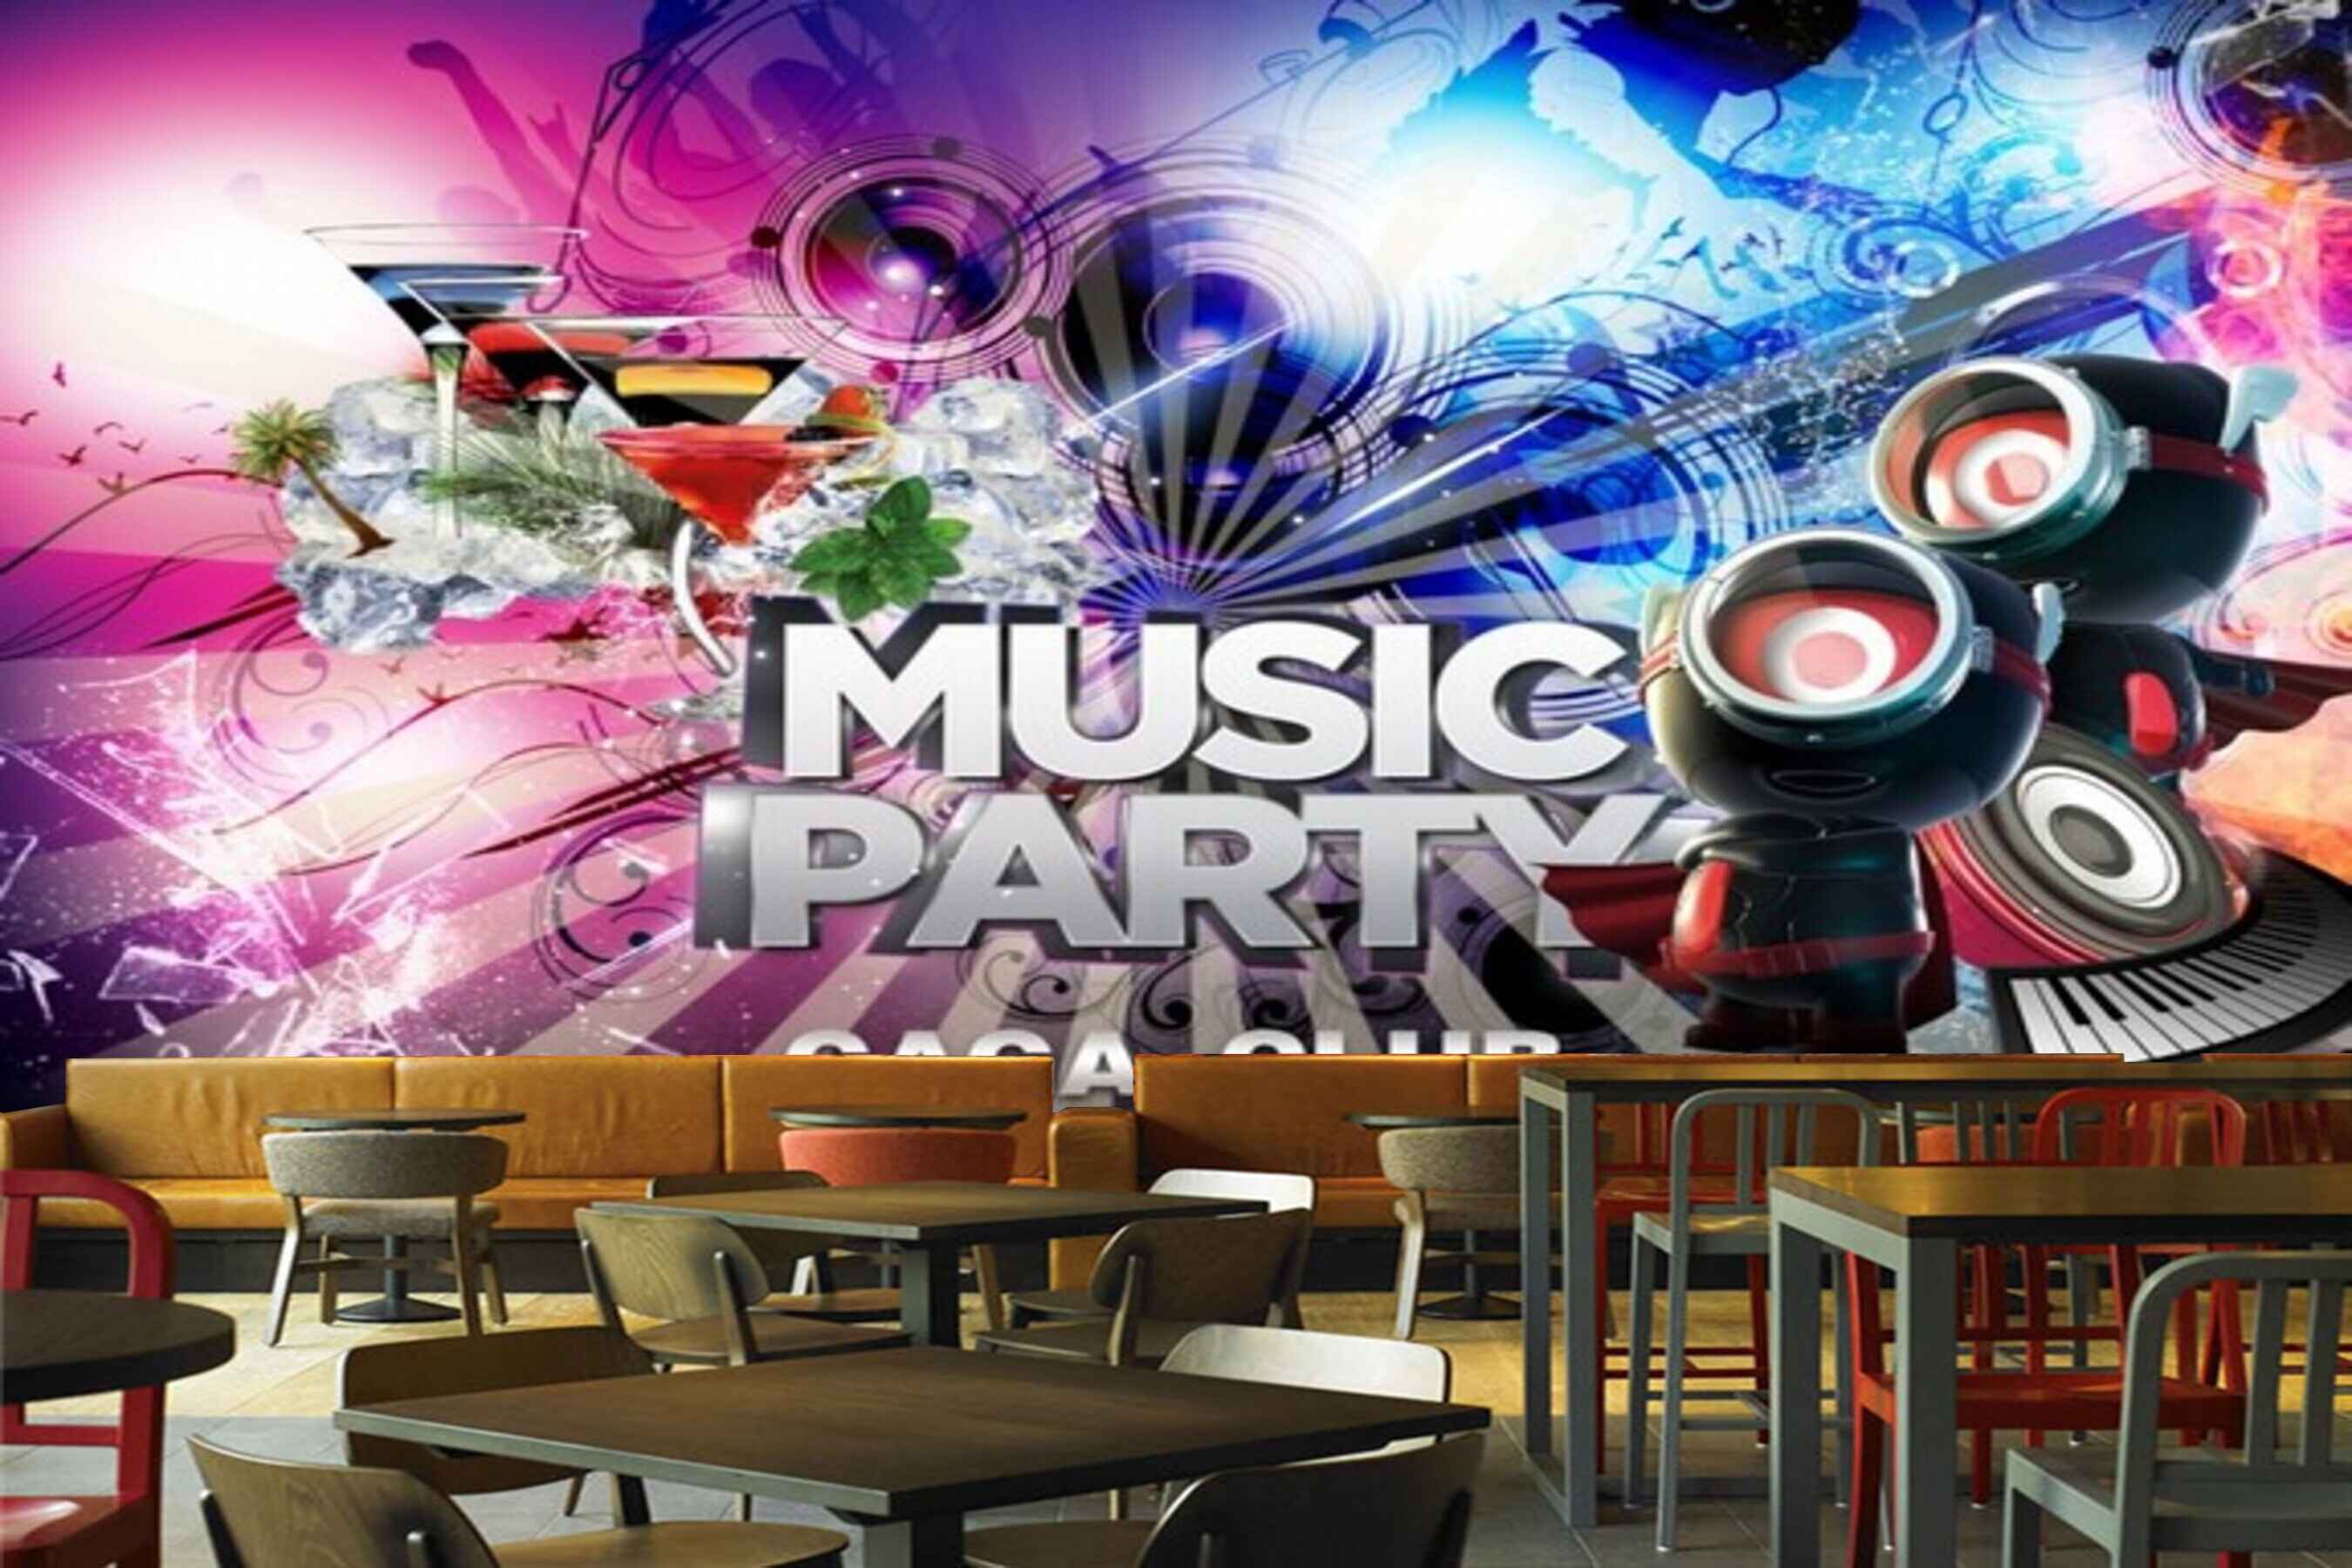 Avikalp MWZ3498 Music Party Gaga Club HD Wallpaper for Disco Club Karaoke